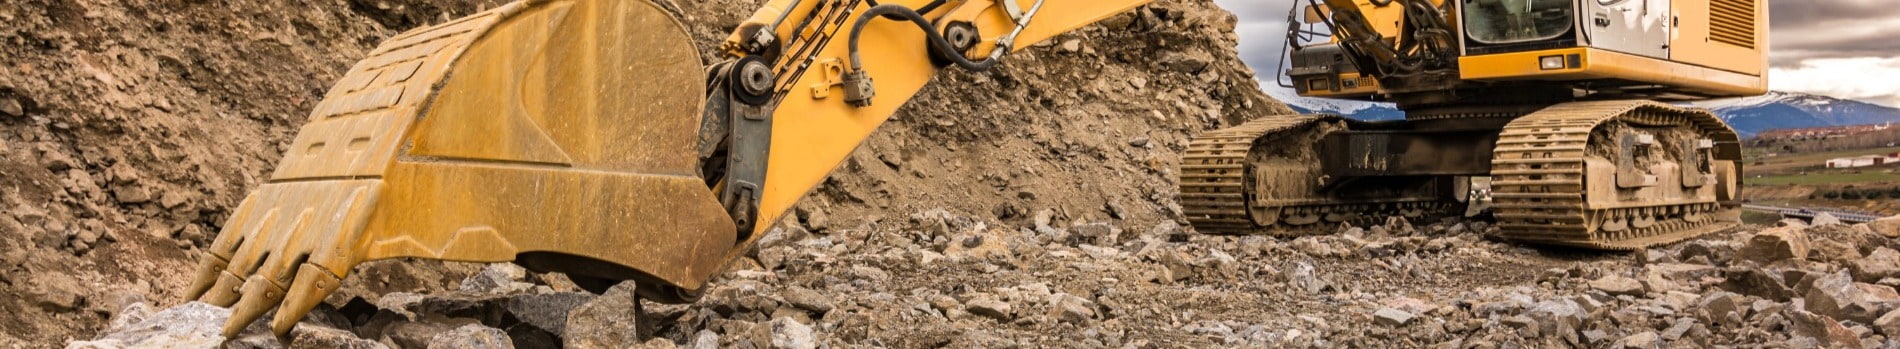 Large yellow mining excavator digging through mine site